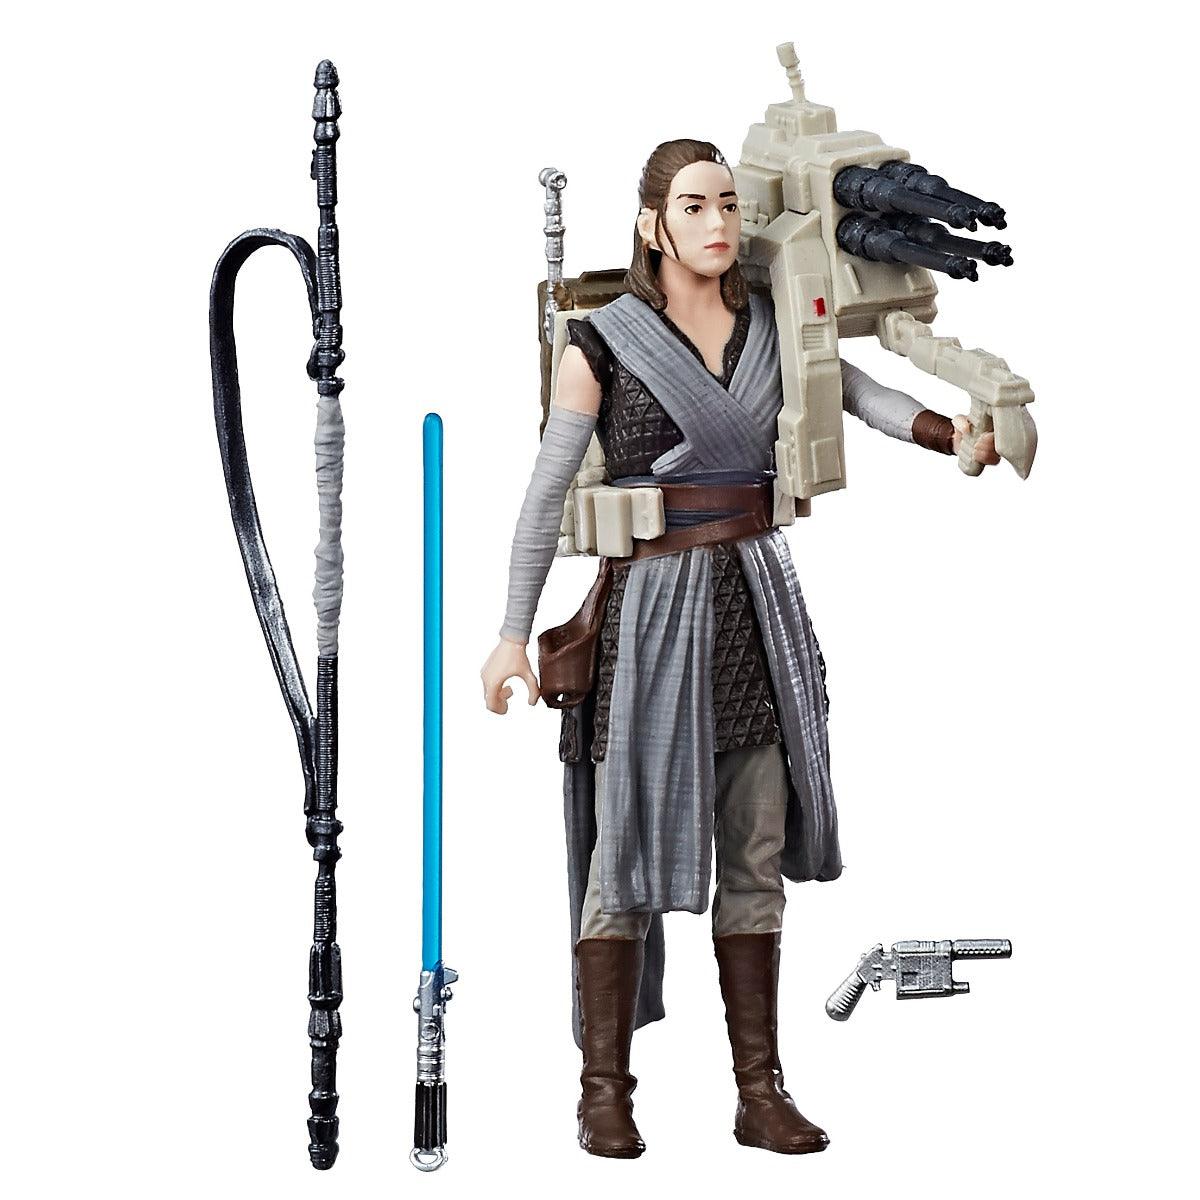 Star Wars: The Last Jedi Rey (Jedi Training) and Elite Praetorian Guard Figure 2-Pack 3.75 Inches